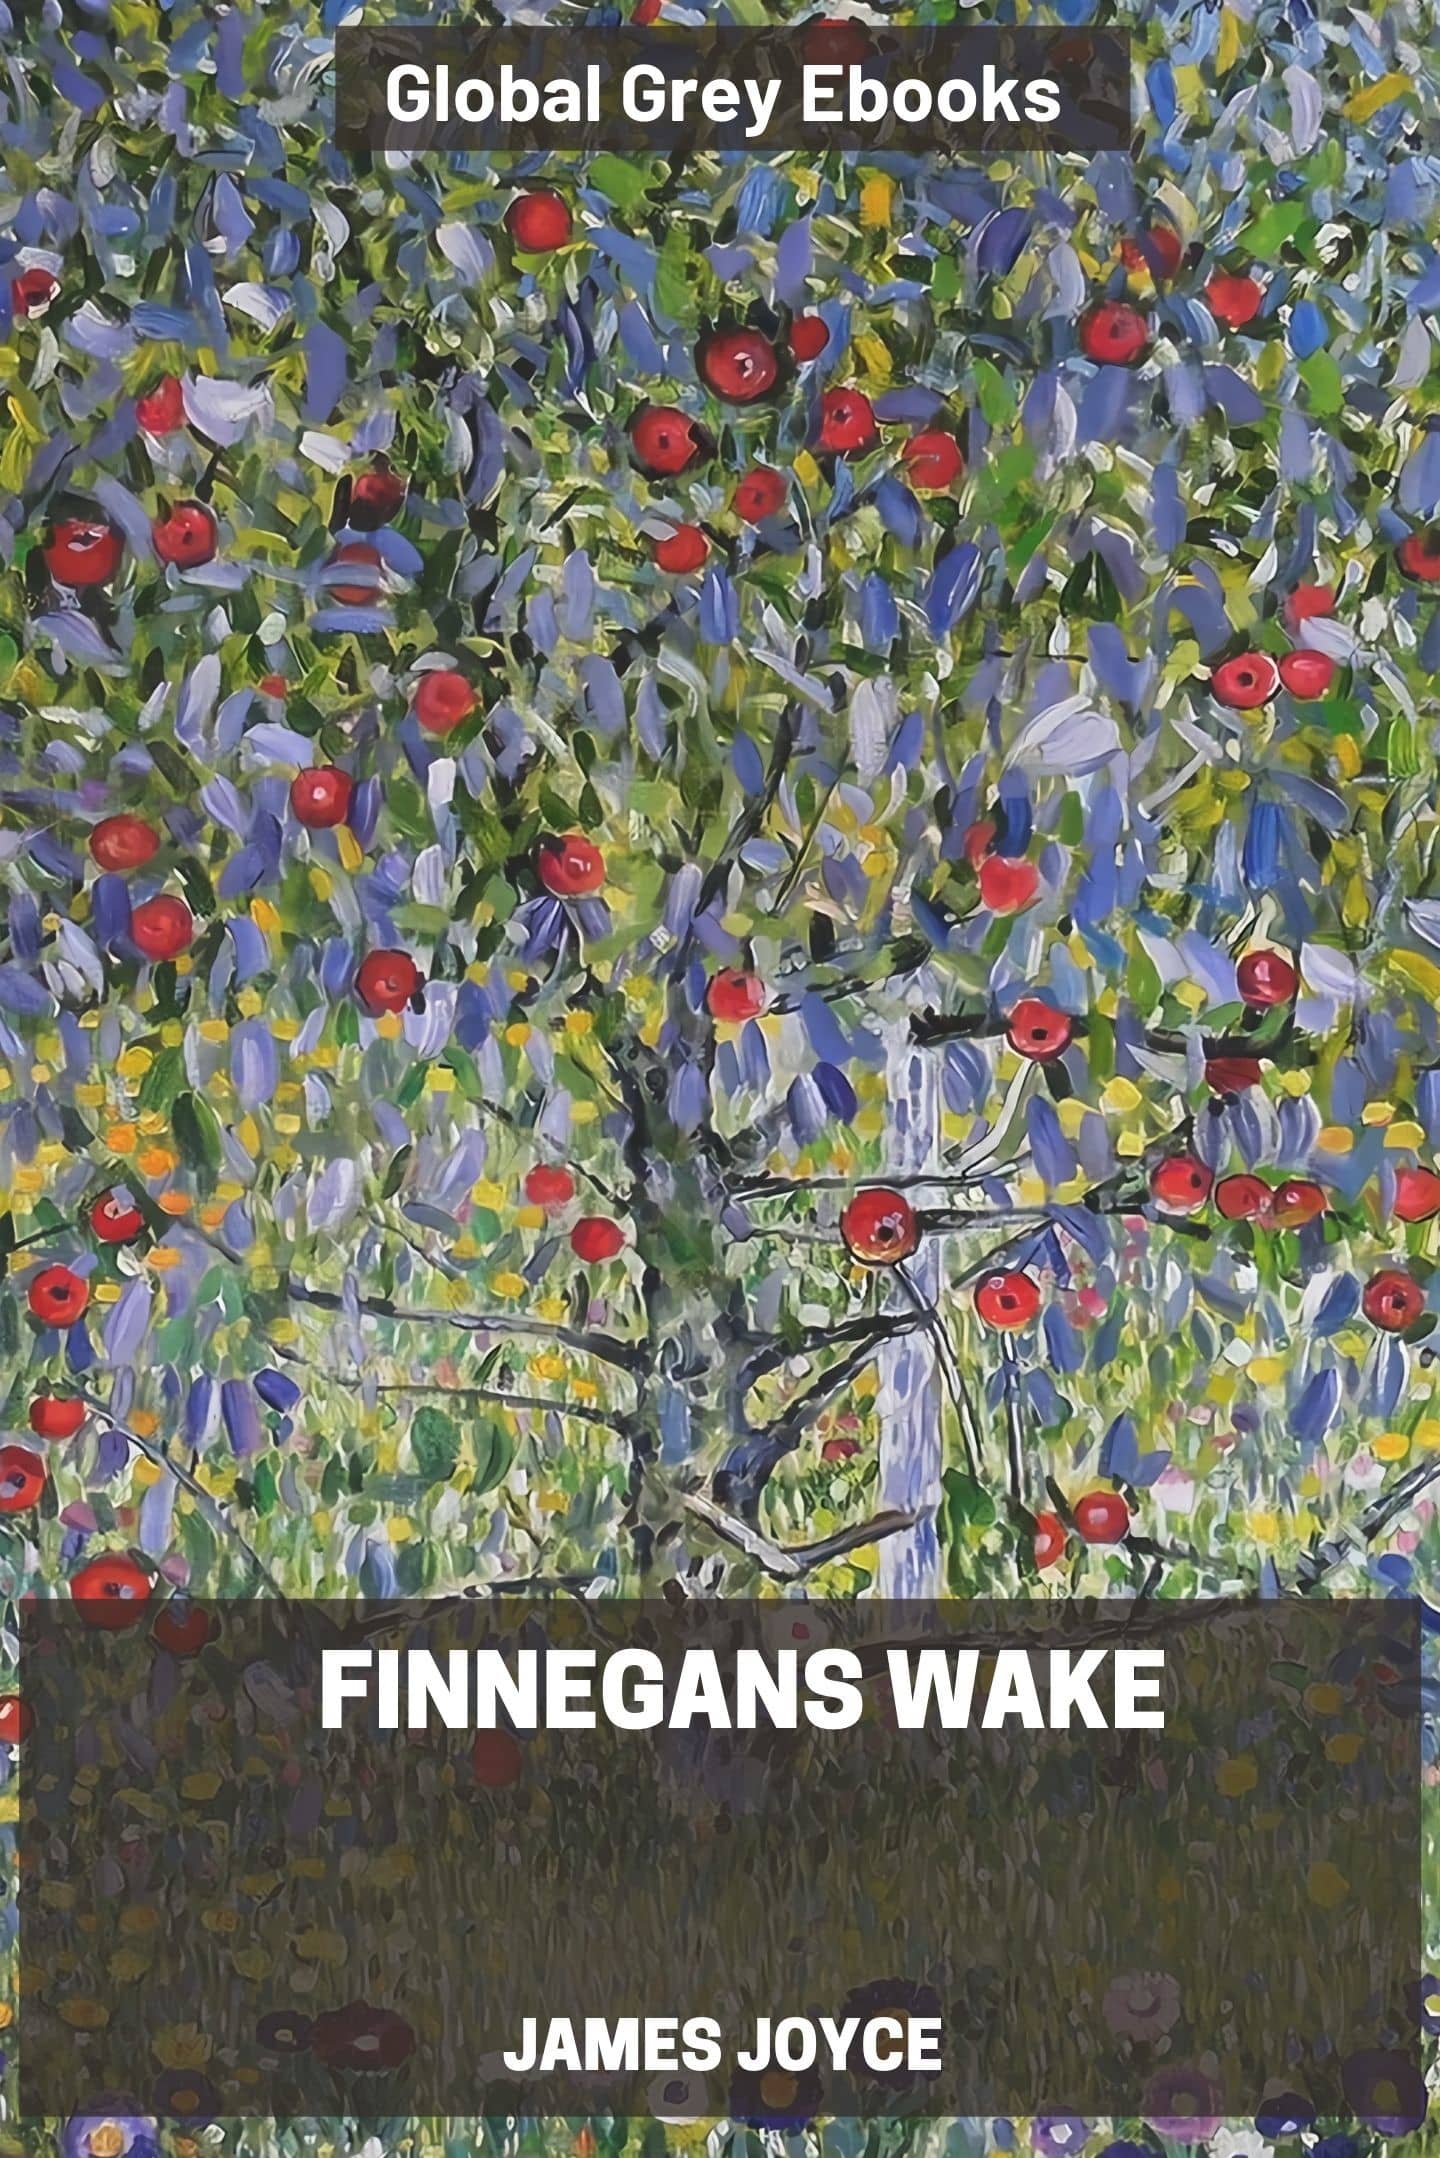 Finnegans Wake, by James Joyce - Complete text online - Global Grey ebooks